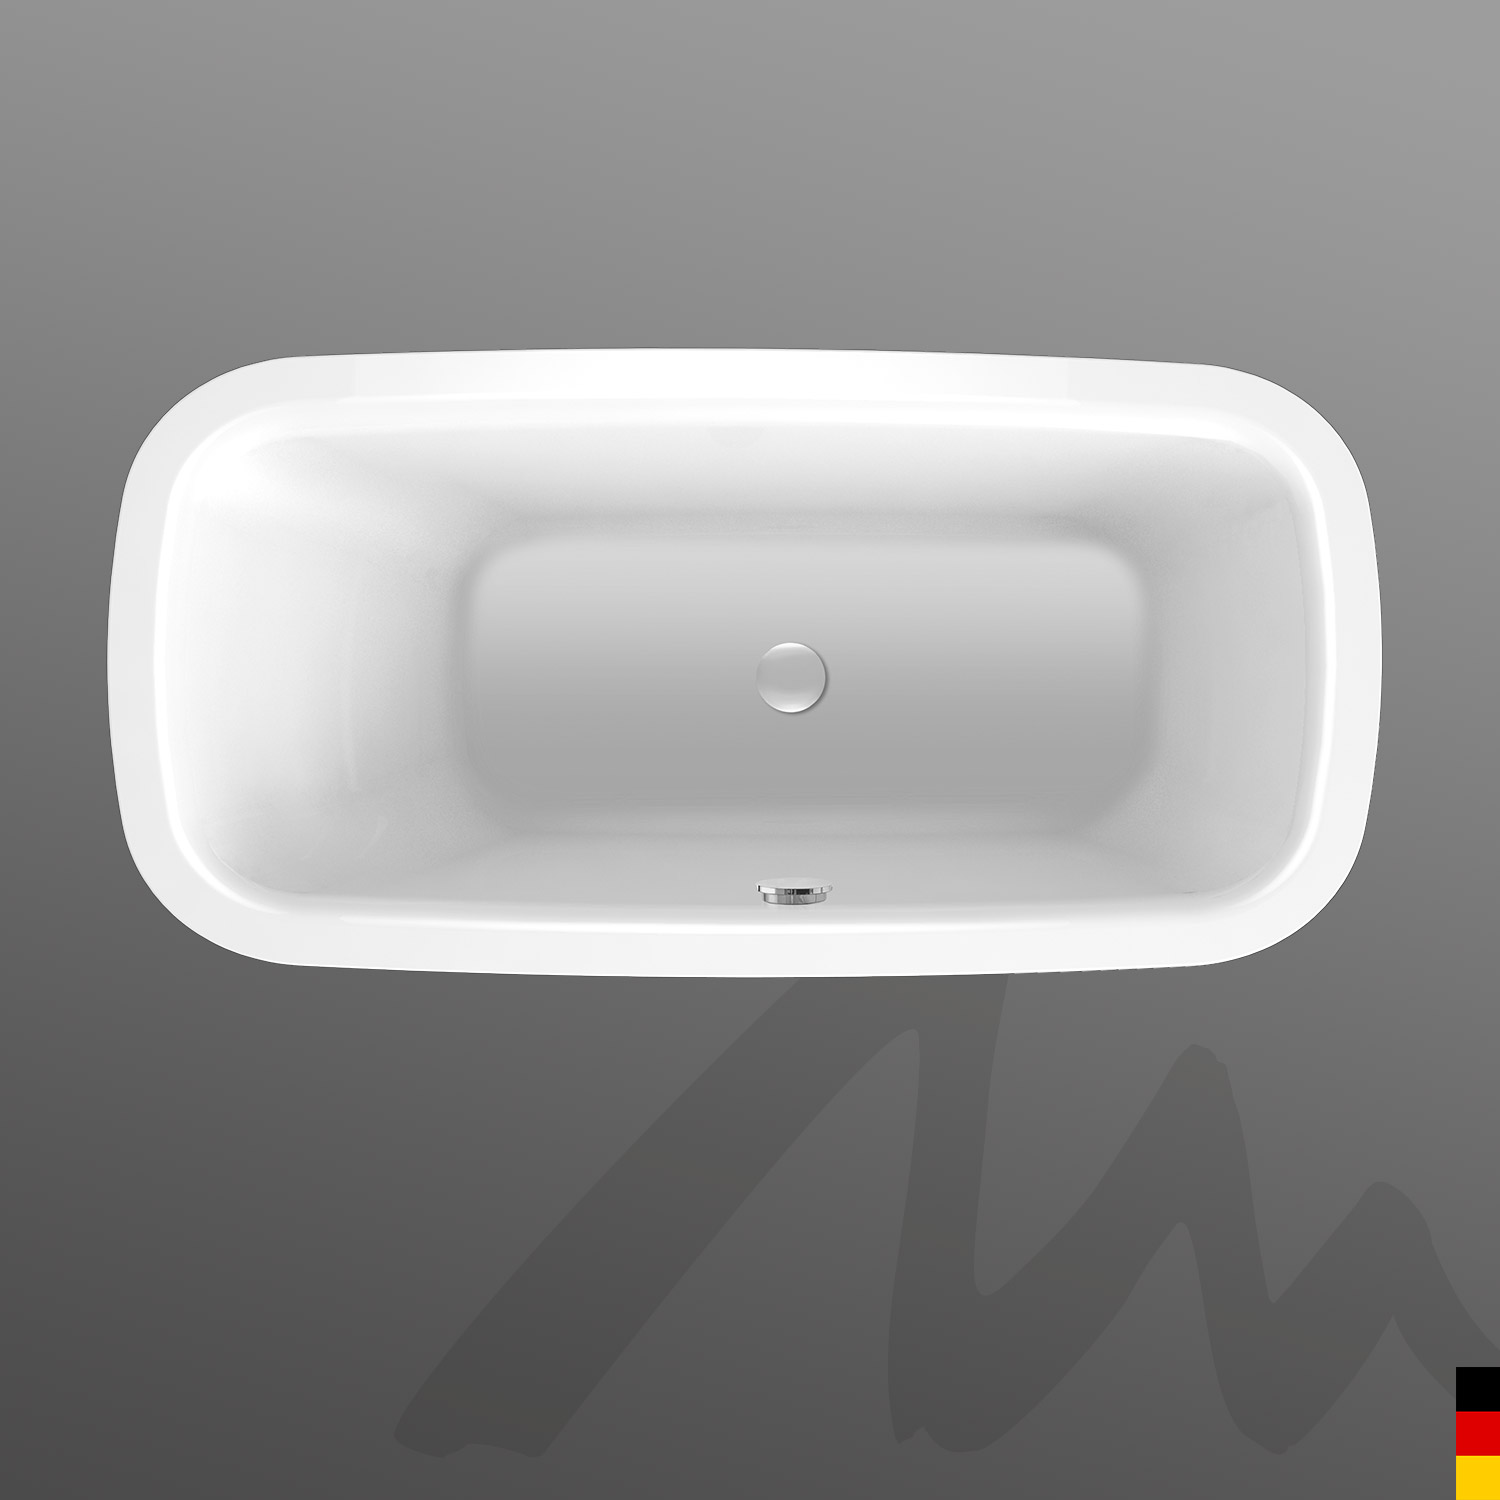 Mauersberger Badewanne Oval Nivalis Oval 180/90 uno  180x90x43cm  Farbe:rein-weiß